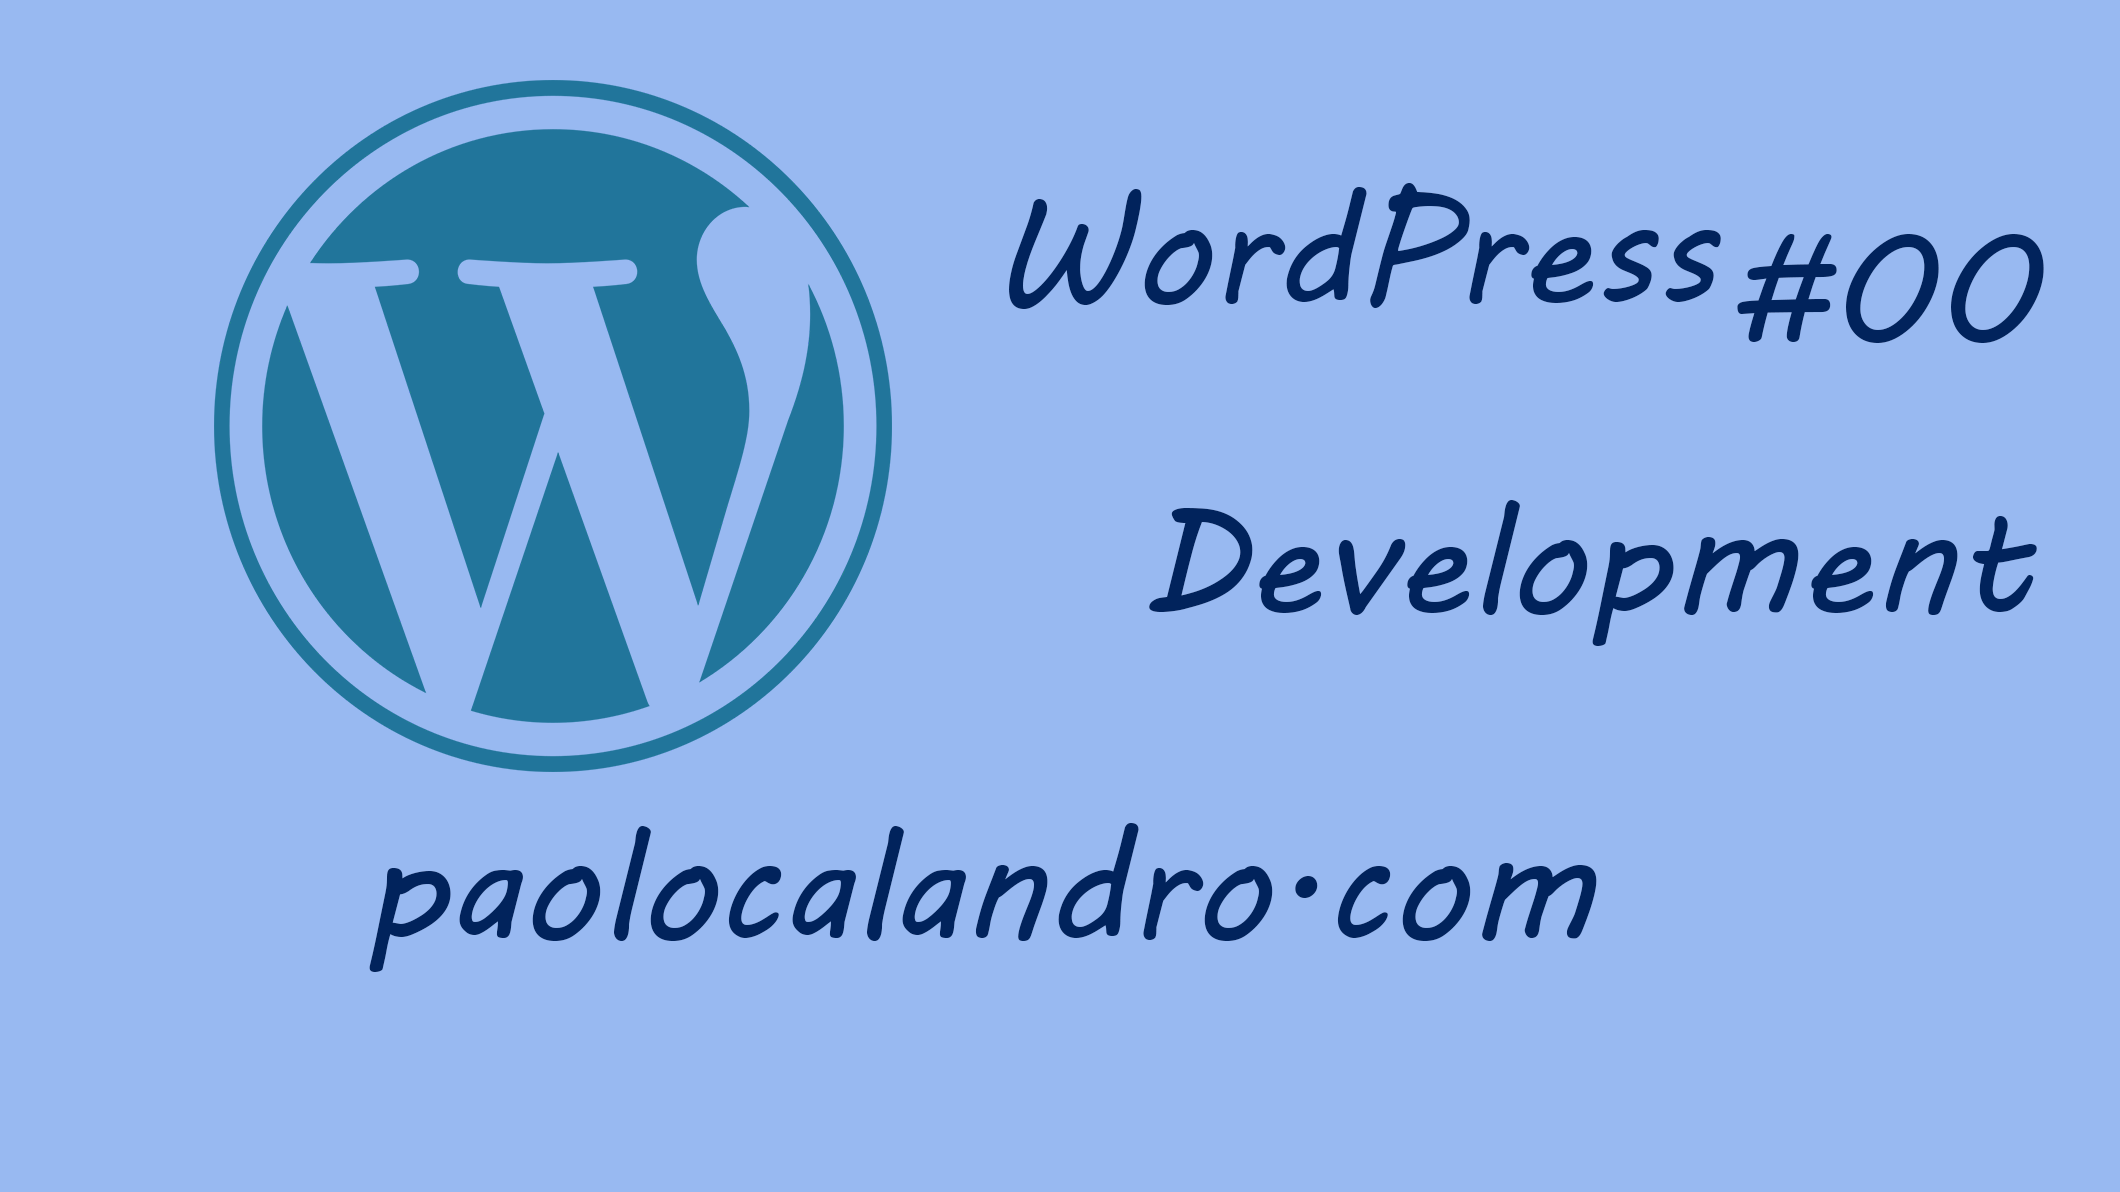 wordpress varese development 00